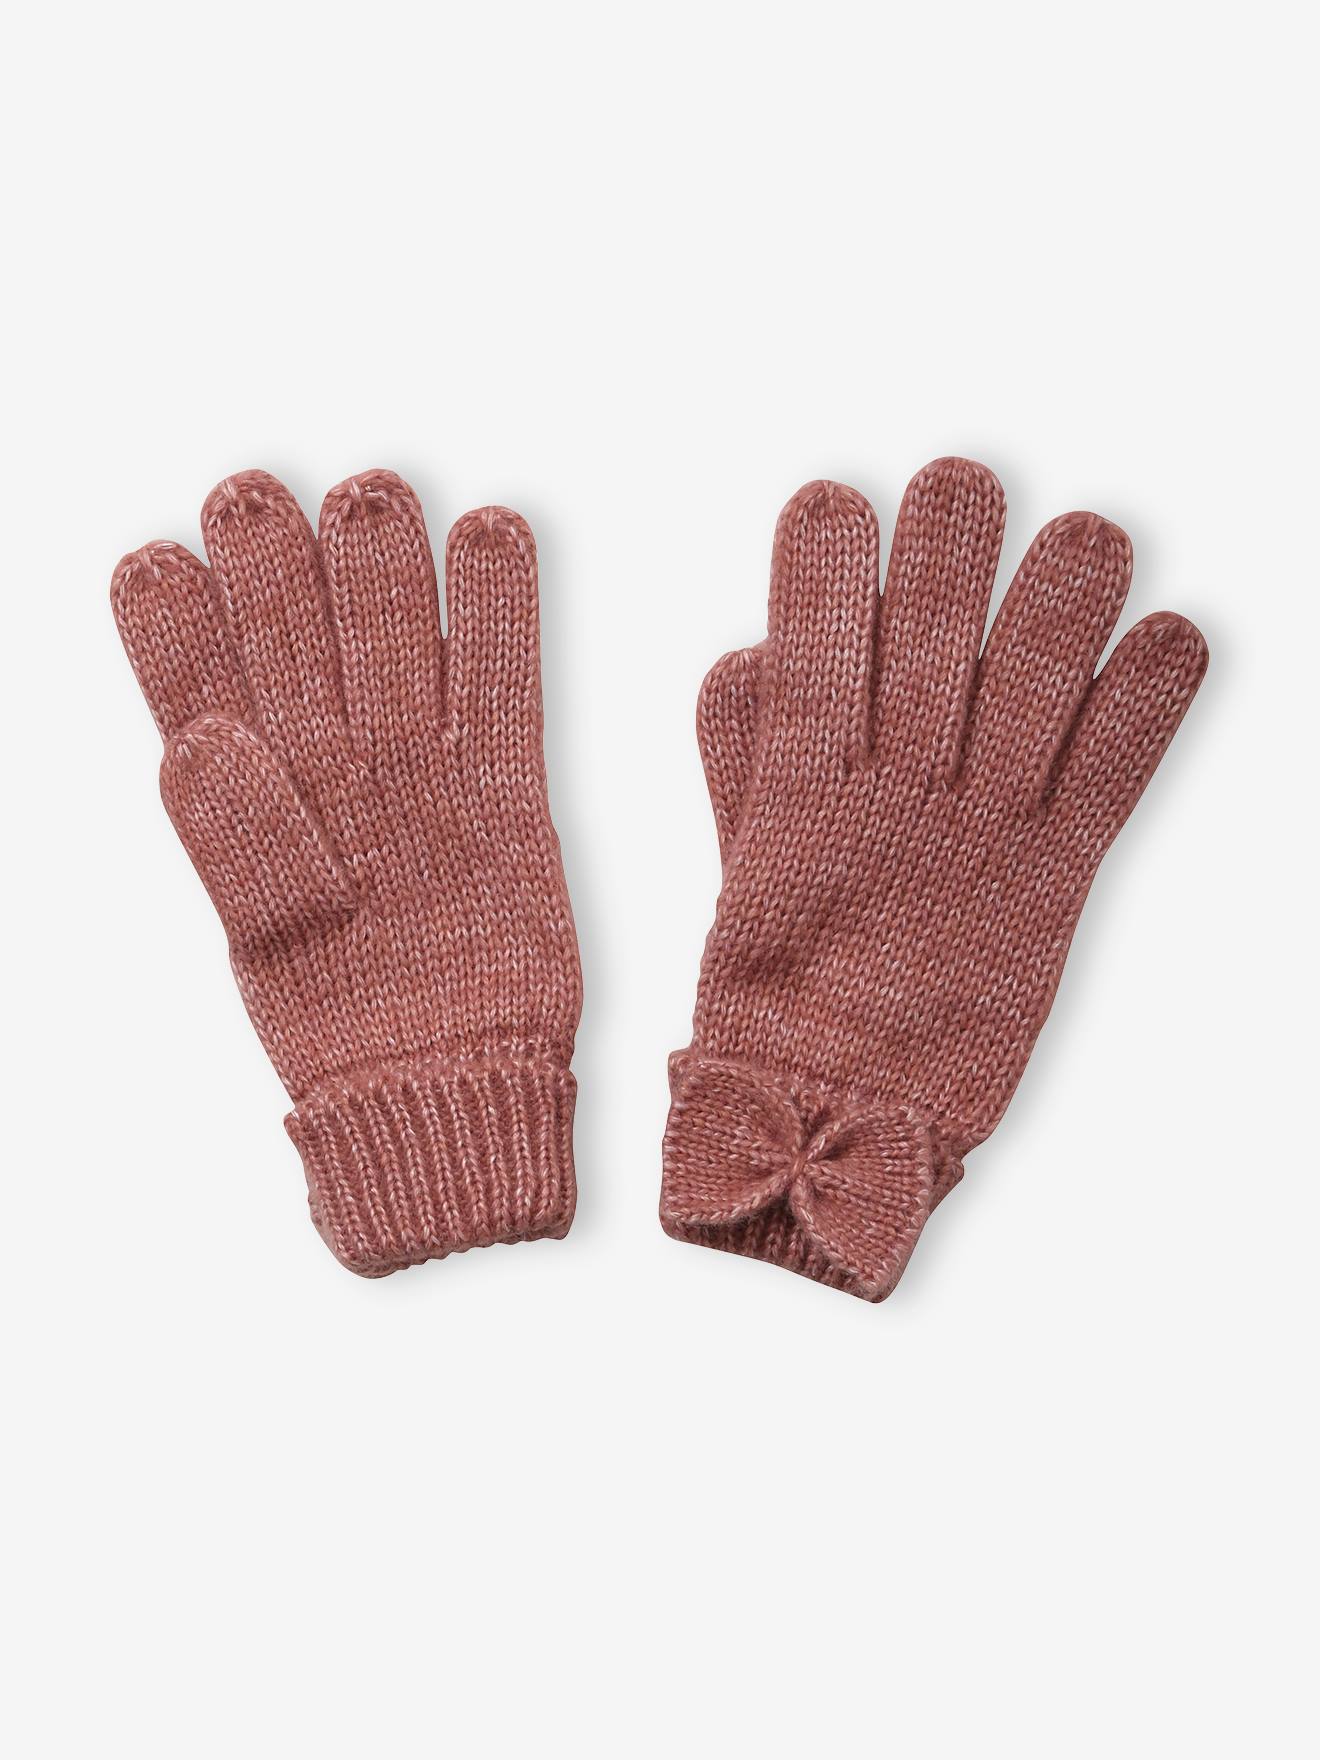 Duffi gloves KIDS FASHION Accessories discount 50% Beige 0M 